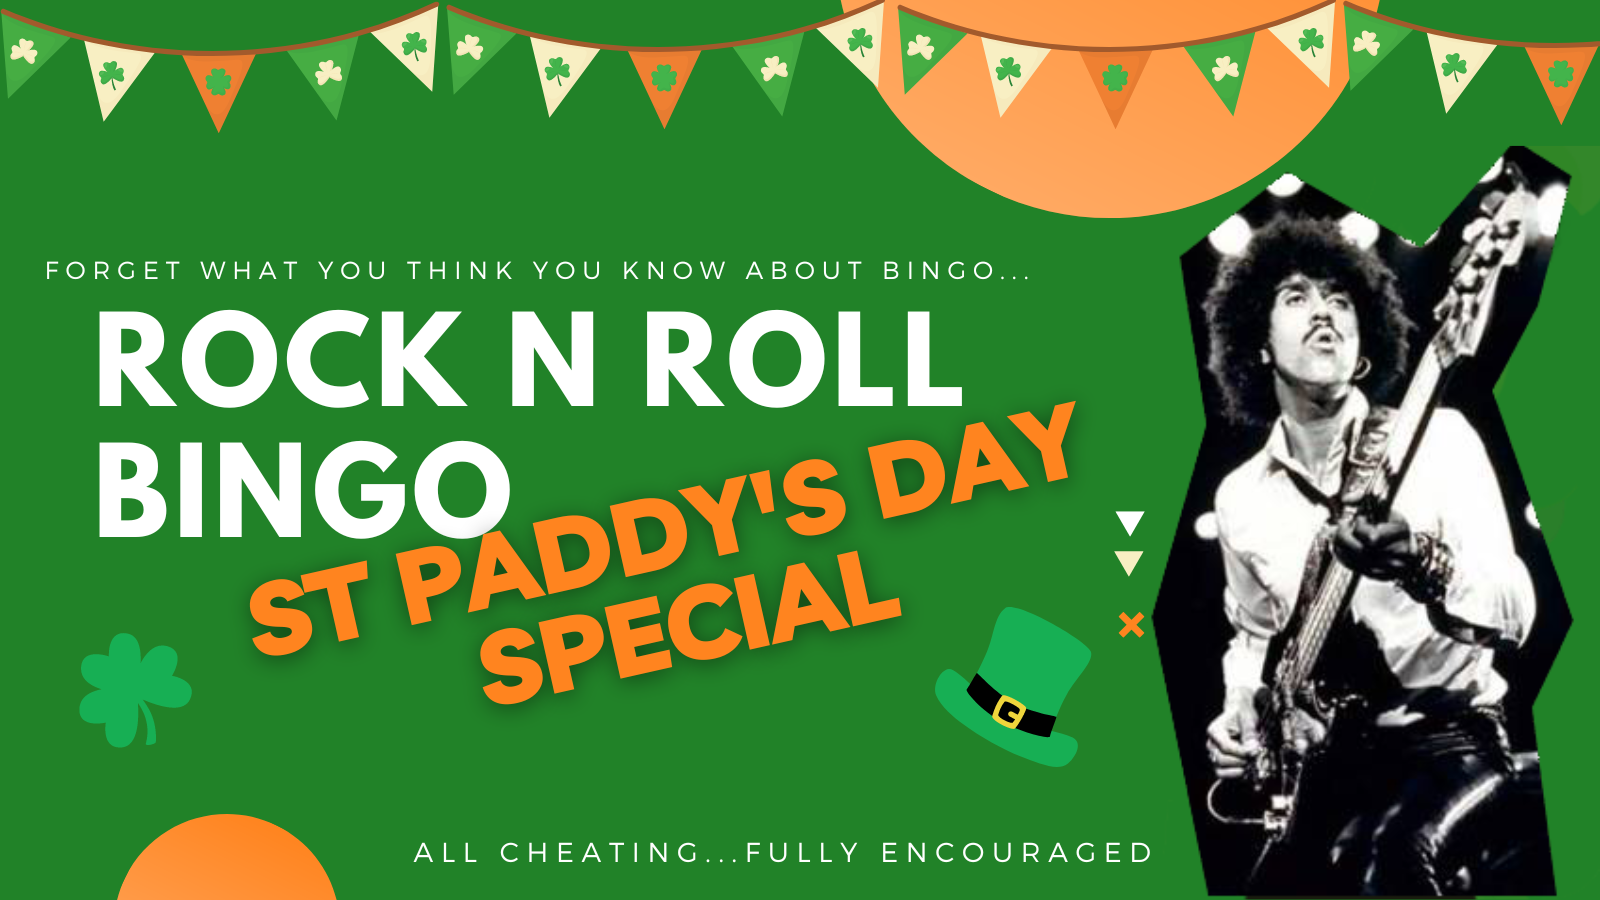 Rock N Roll Bingo @ Jimmy’s – Paddy’s Day Special